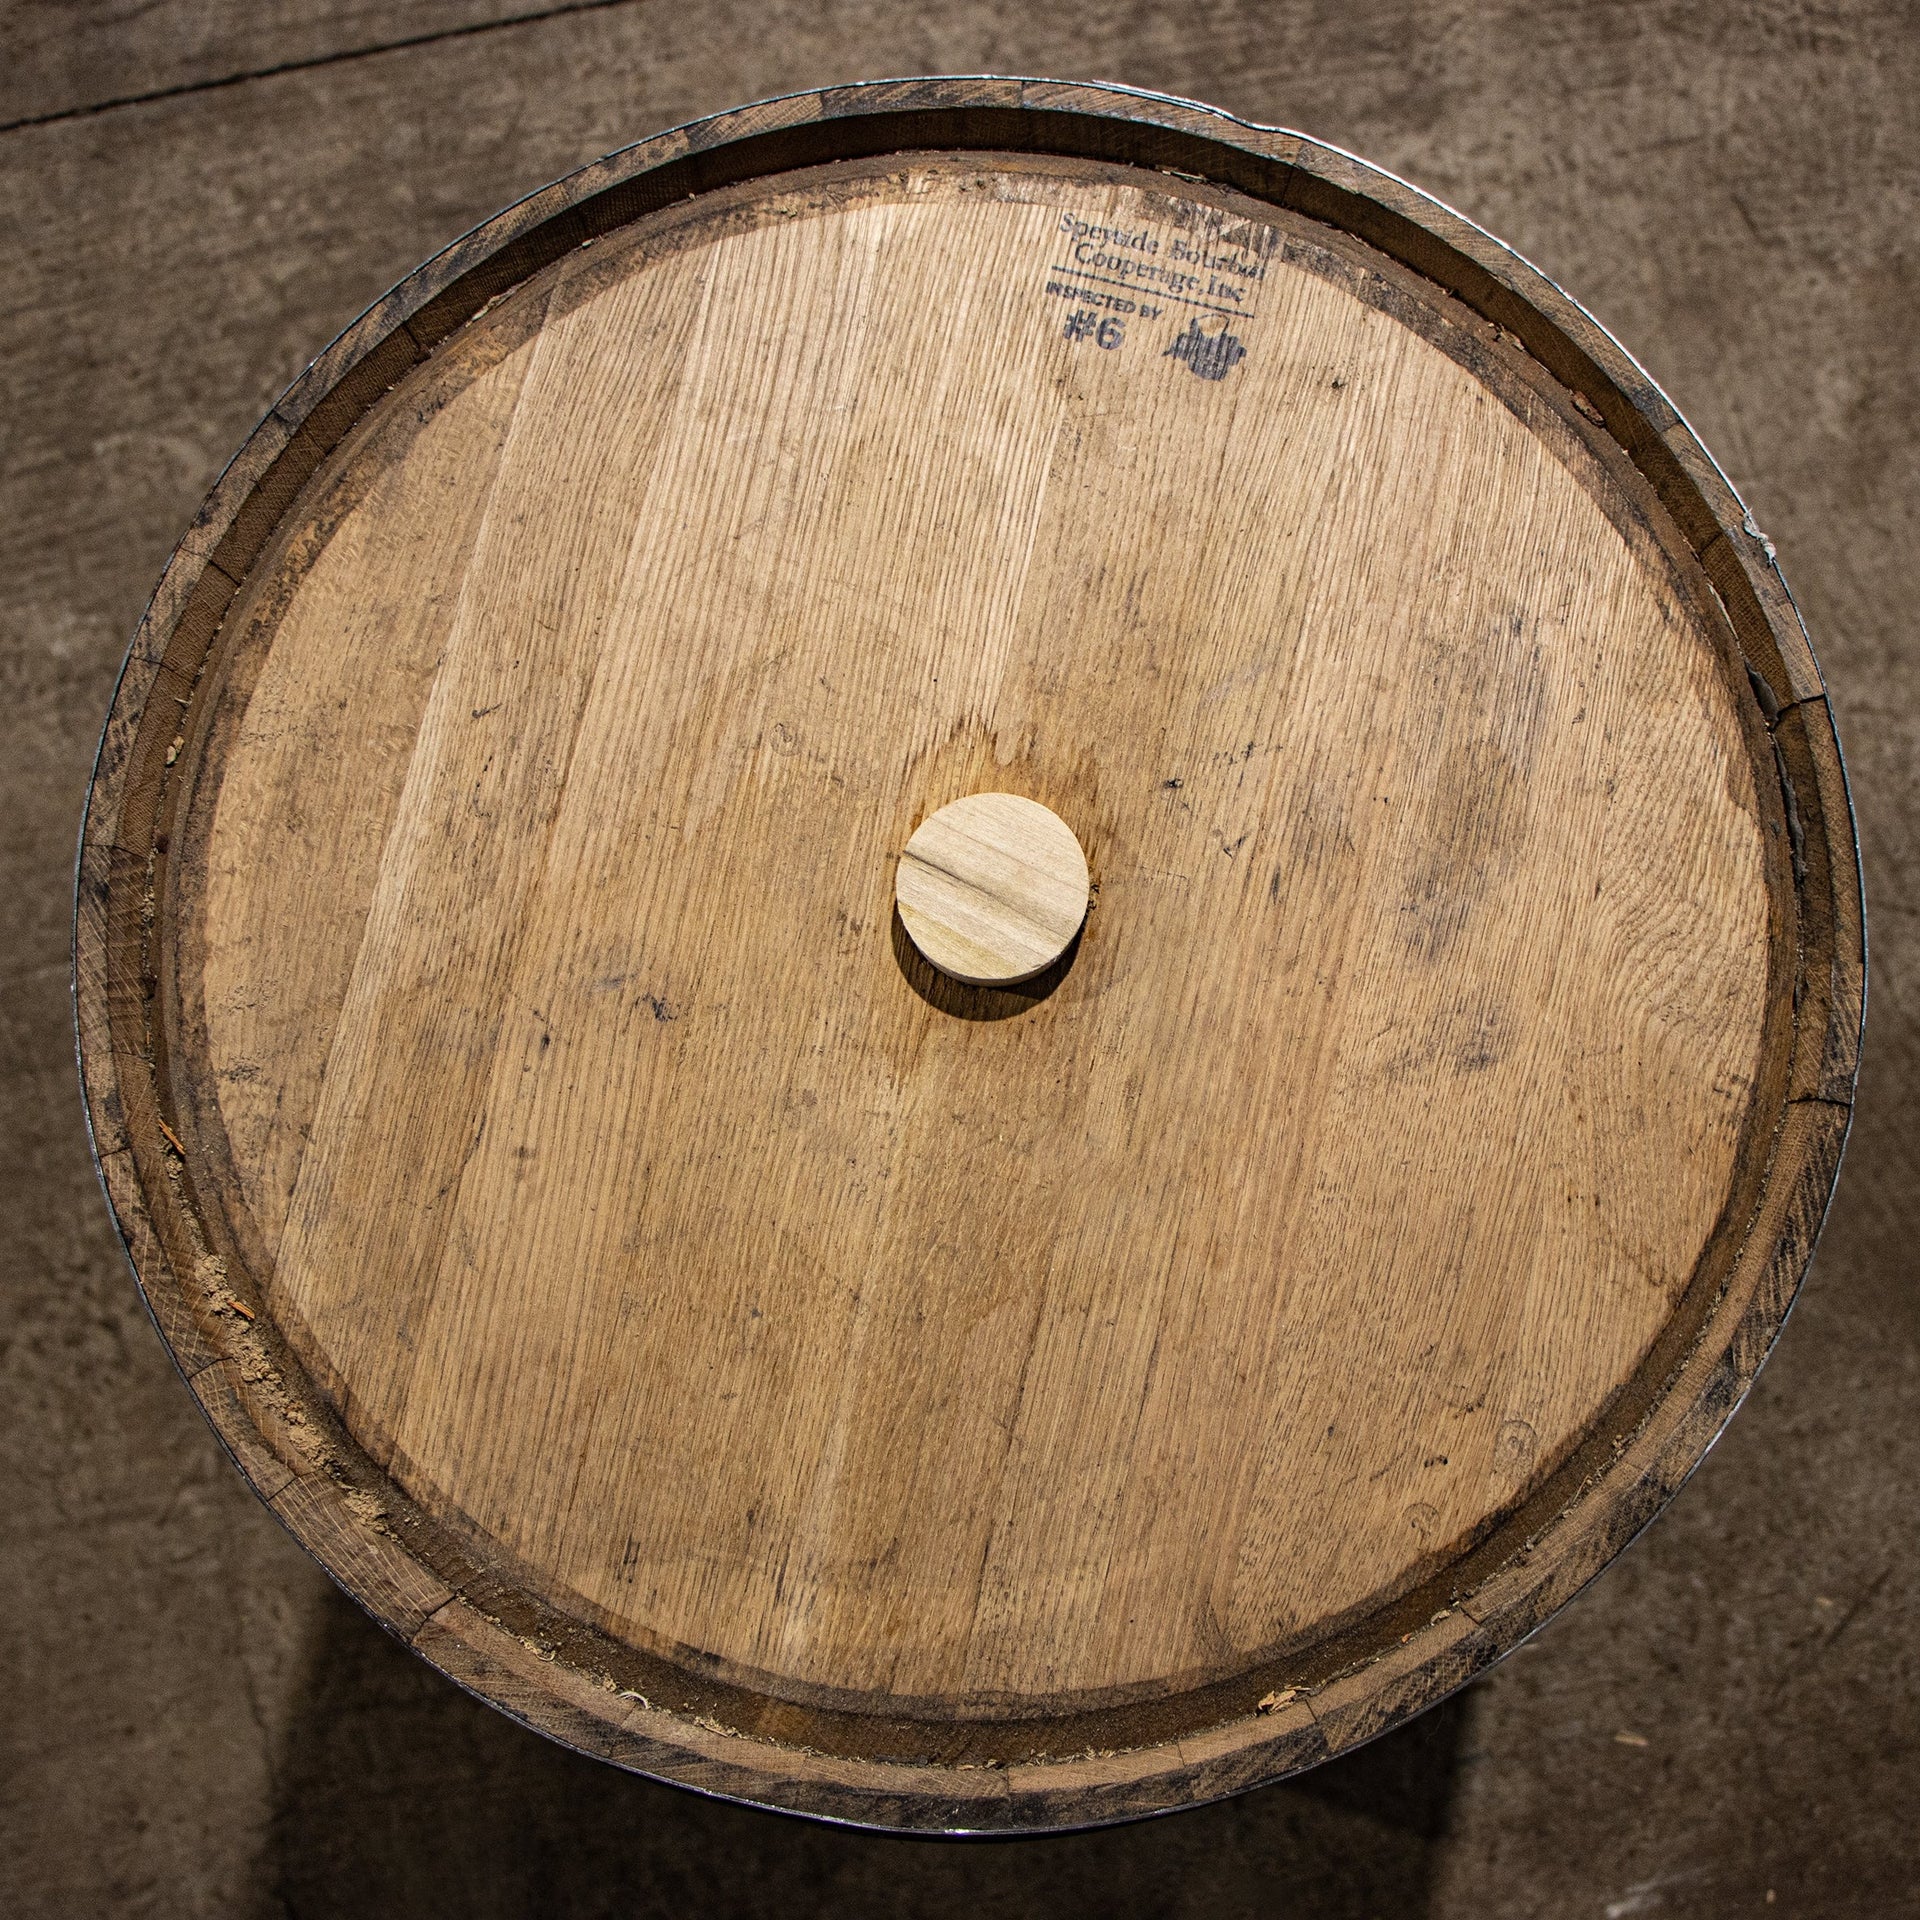 53 Gallon Bourbon Barrel - Fresh Empty, Once Used